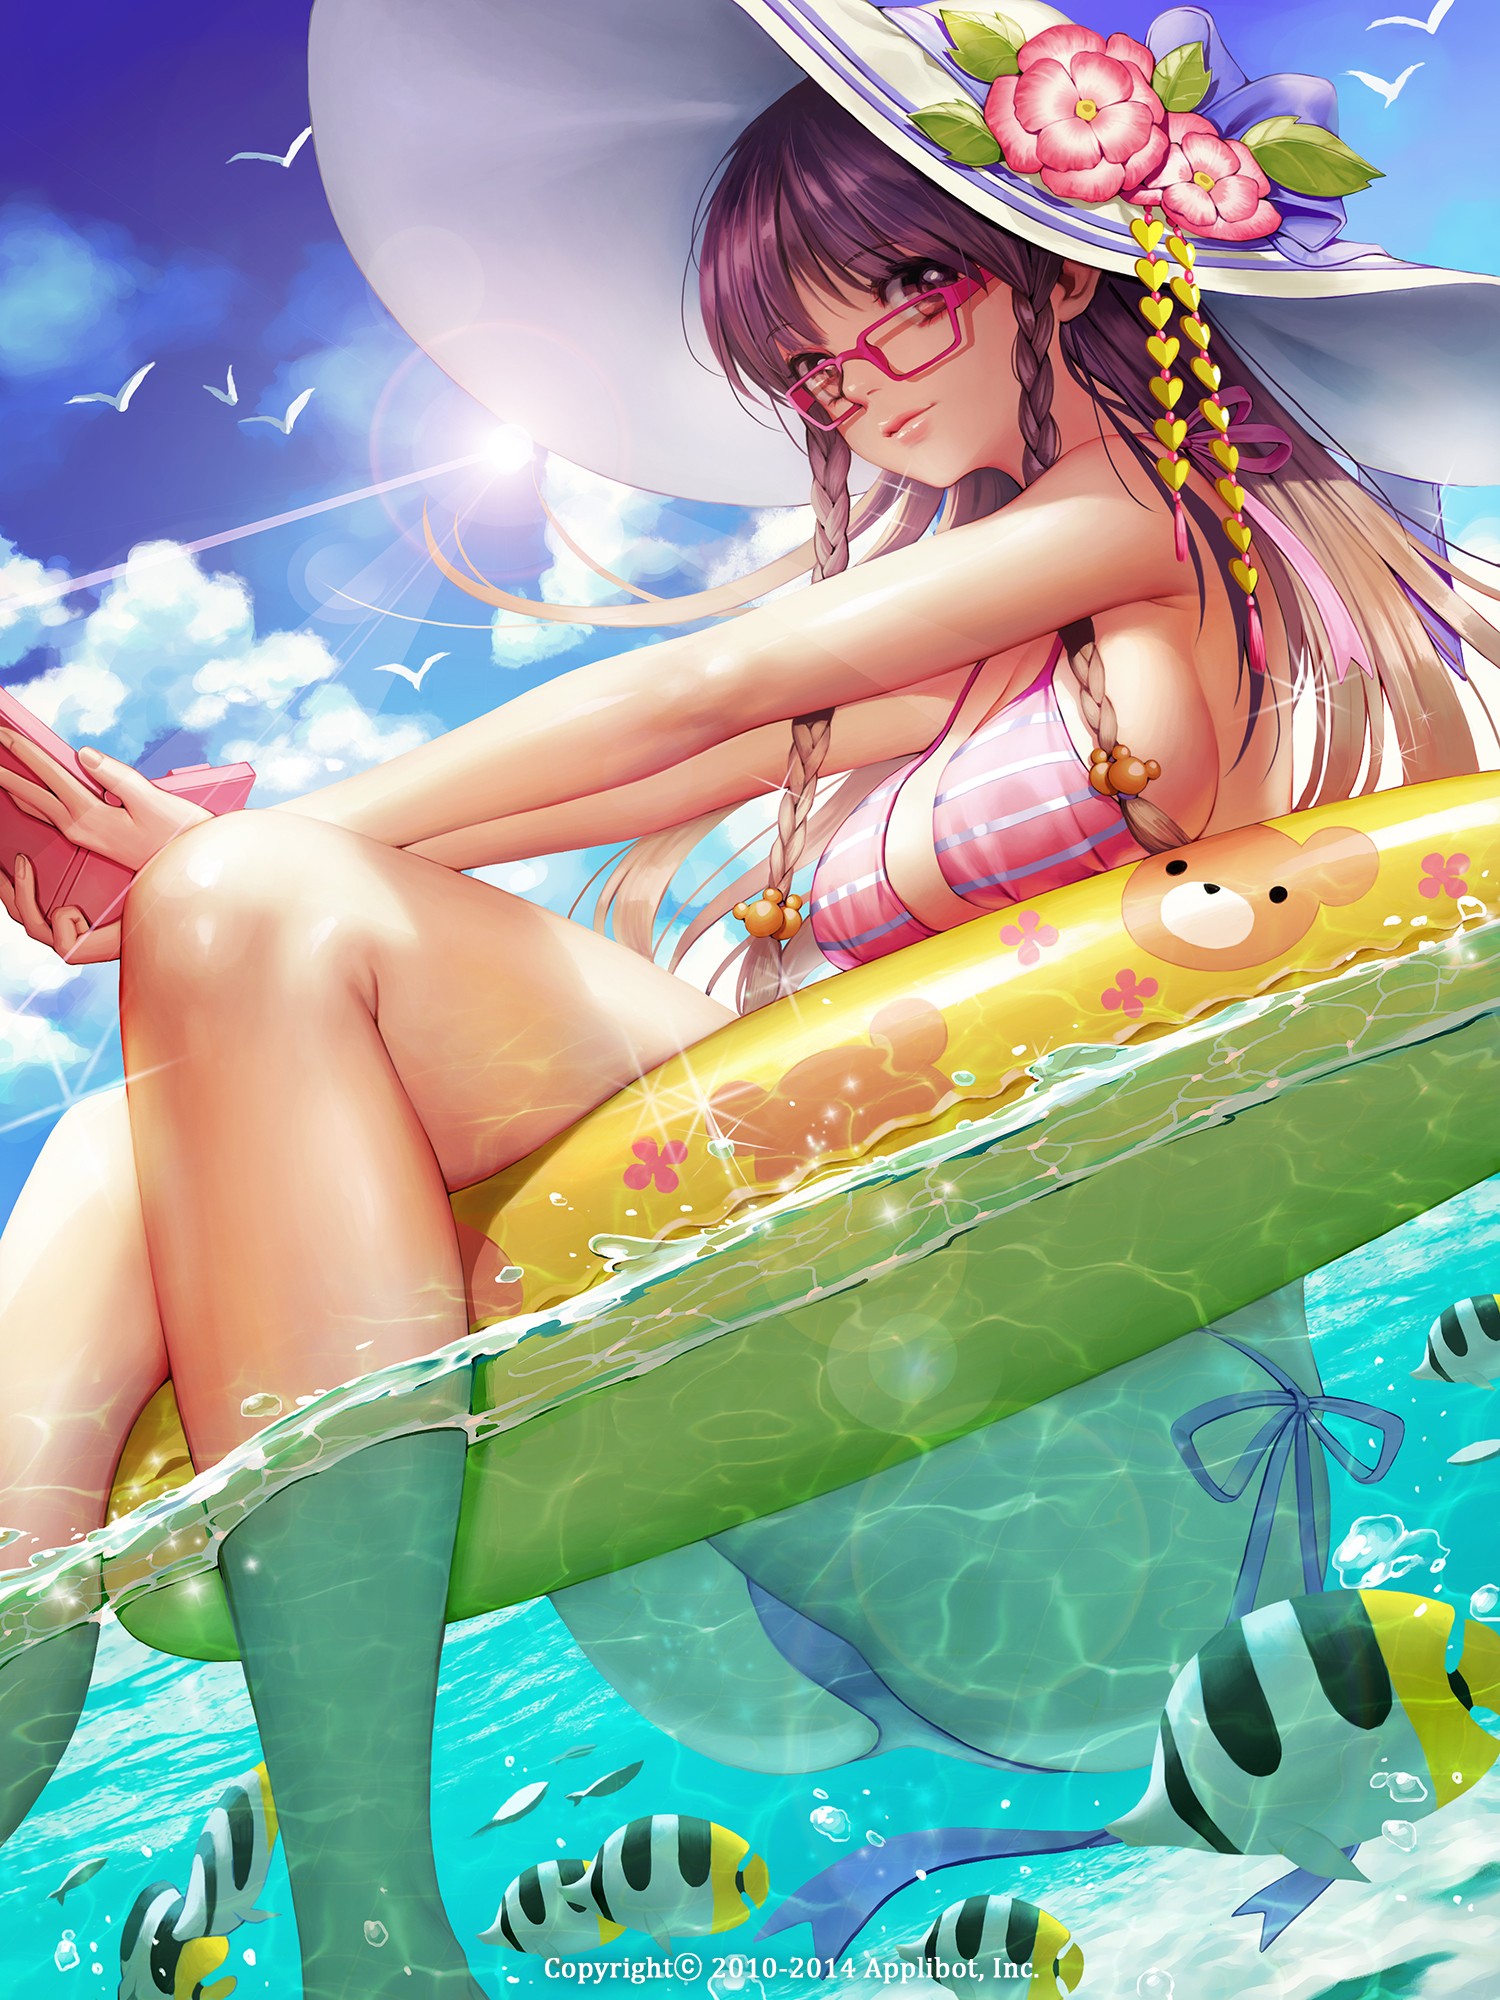 Anime 1500x2000 anime anime girls Gang Road Joker bikini cleavage wet long hair glasses hat ArtStation boobs swimwear fish air mattress beach floater